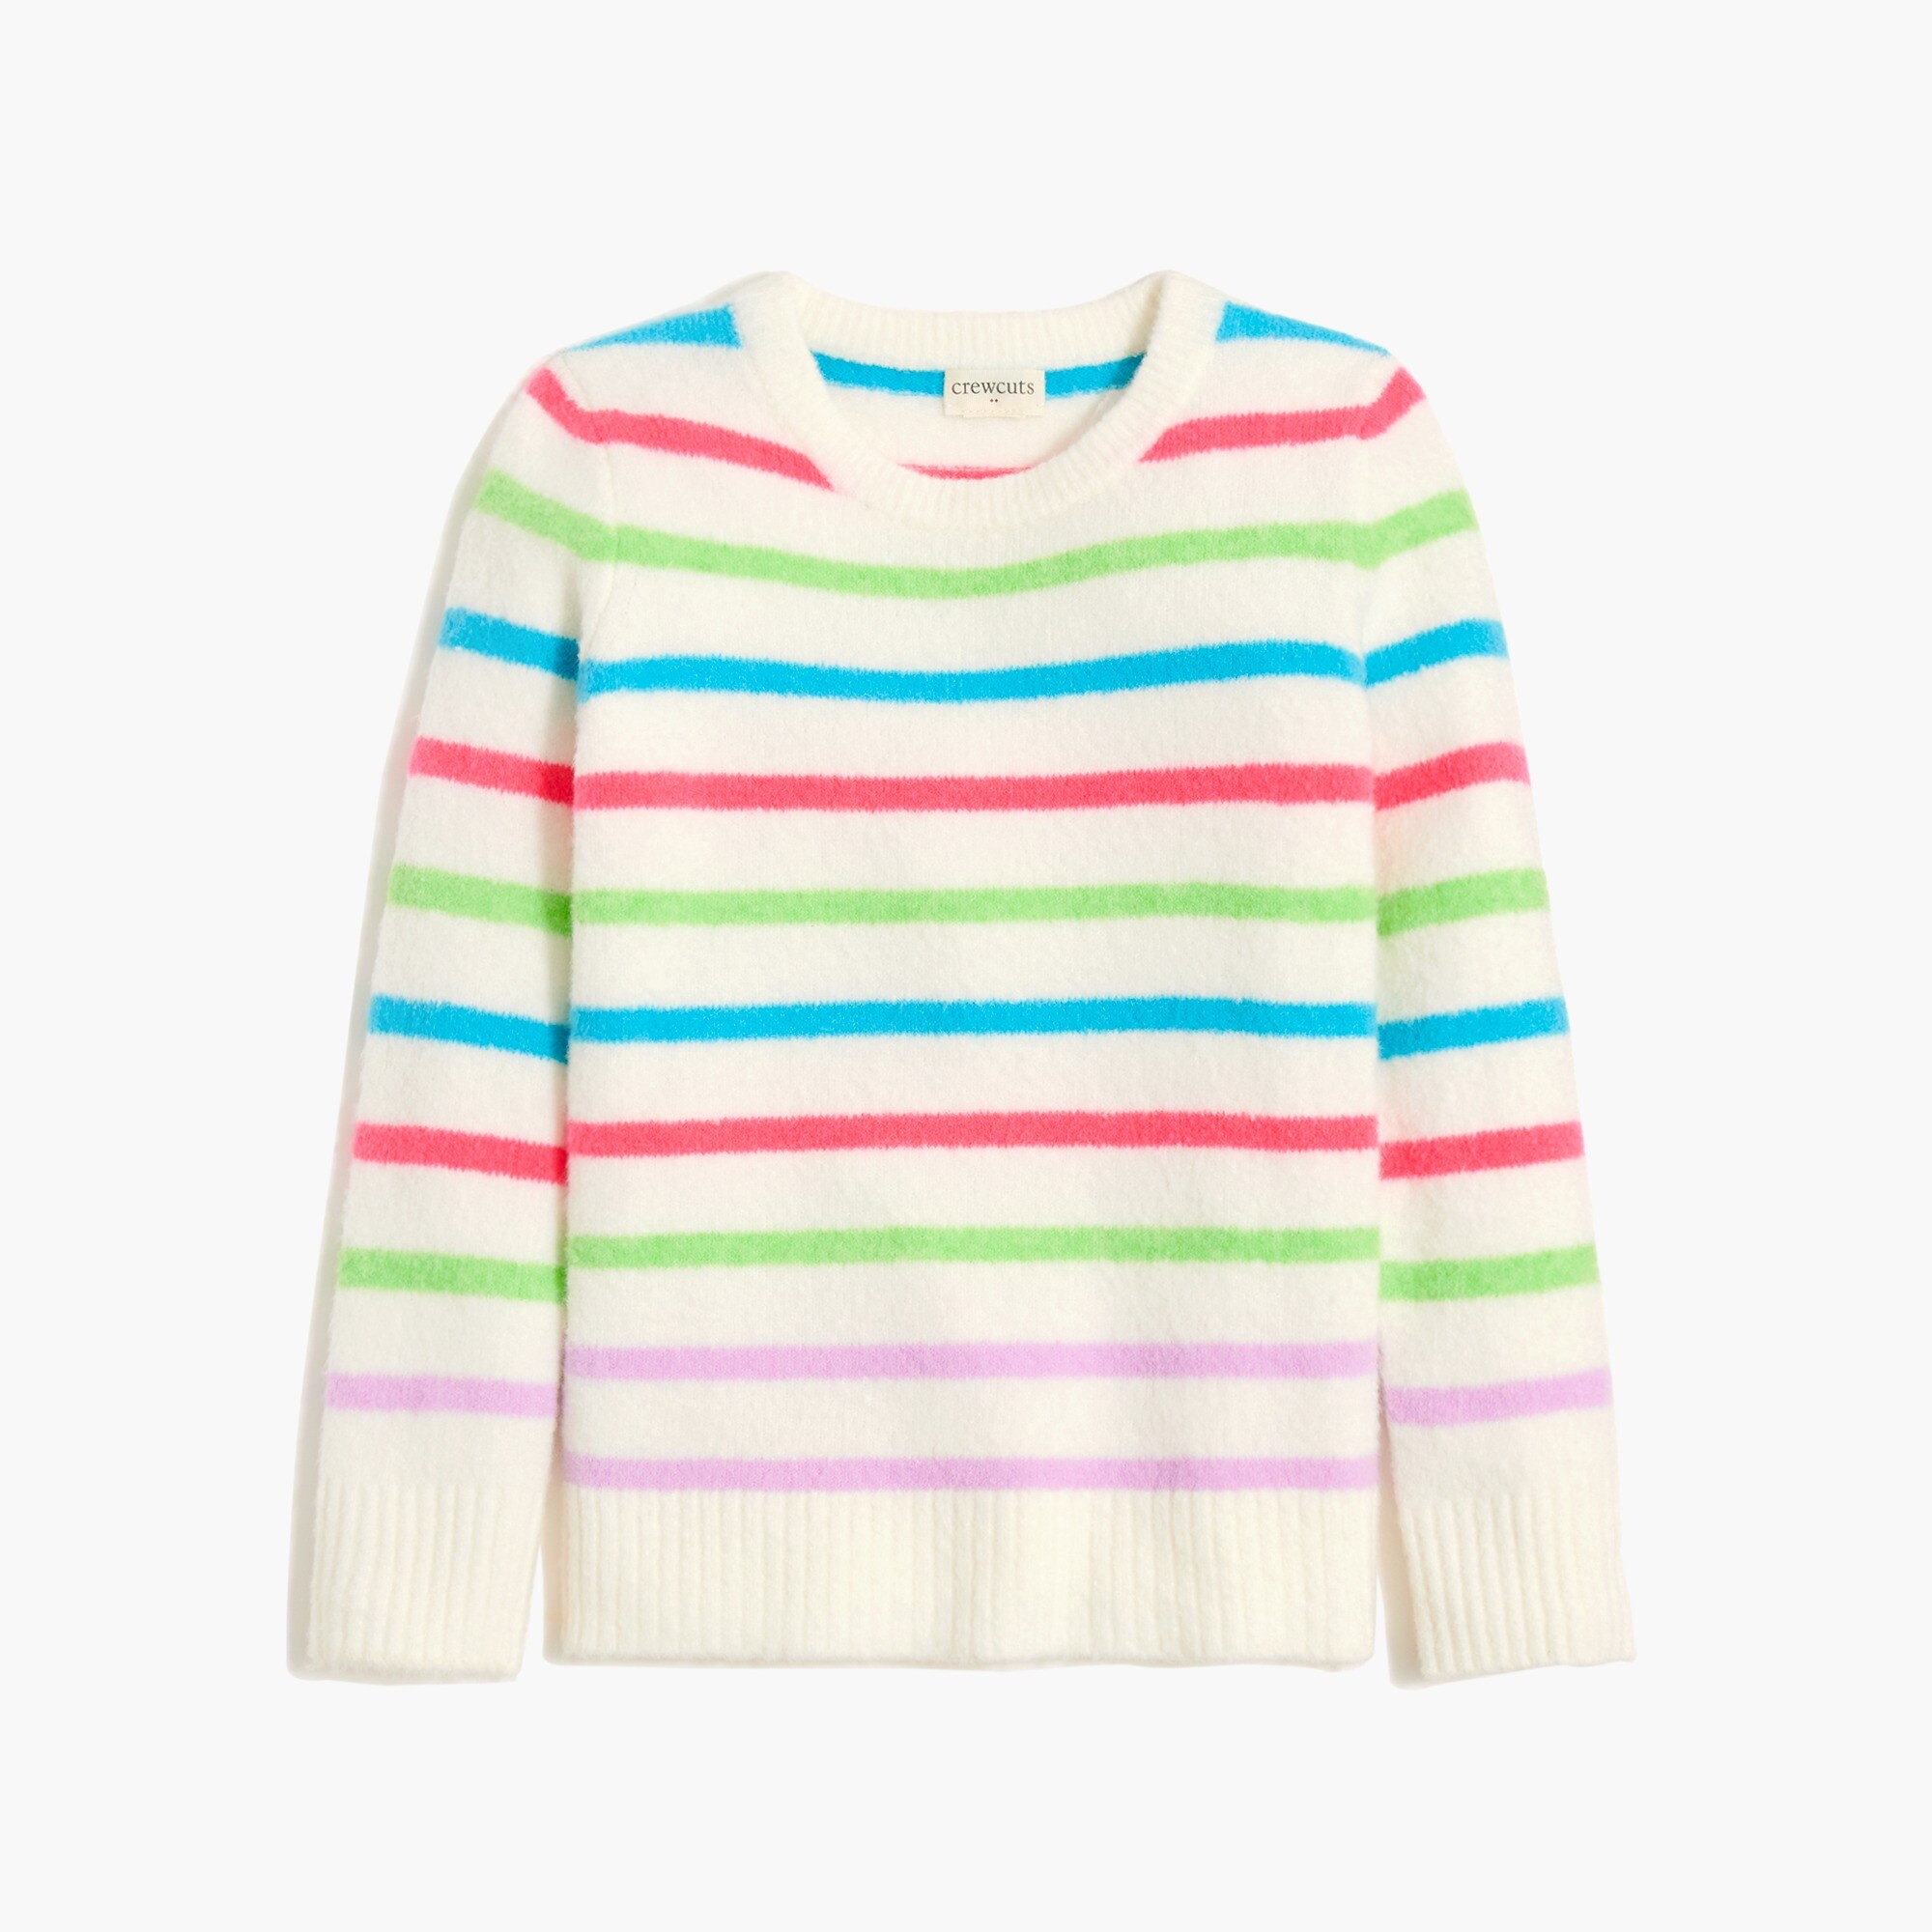  Girls' multistripe sweater in extra-soft yarn